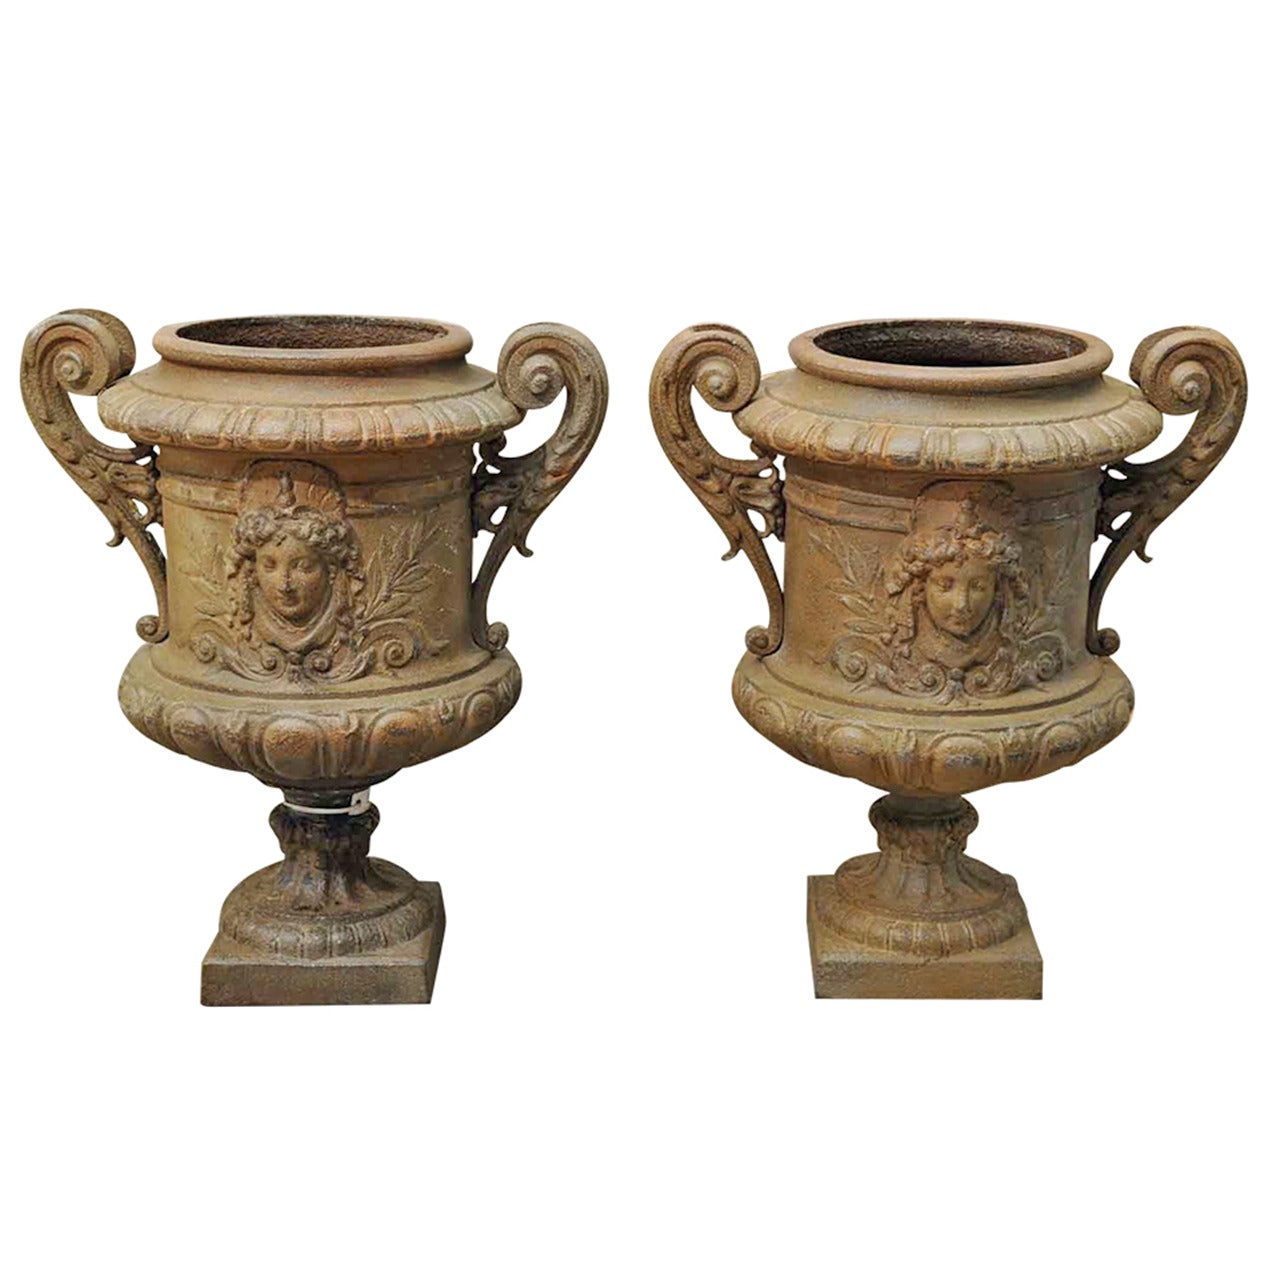 Pair of cast iron vases - Late 19th Century.